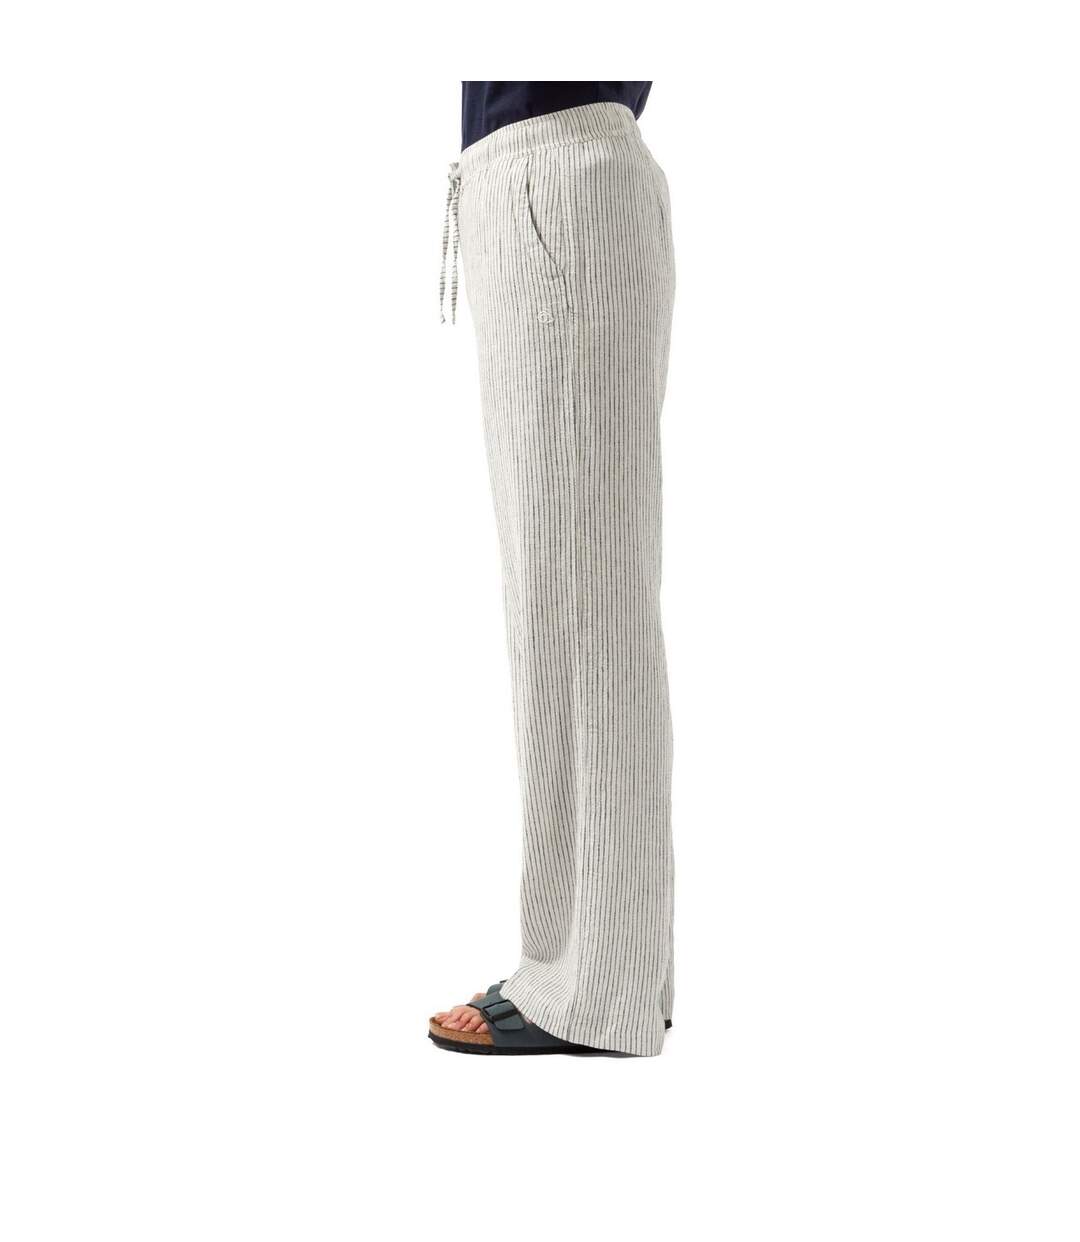 Craghoppers - Pantalon de détente LINAH - Femme (Blanc / Bleu marine) - UTCG1573